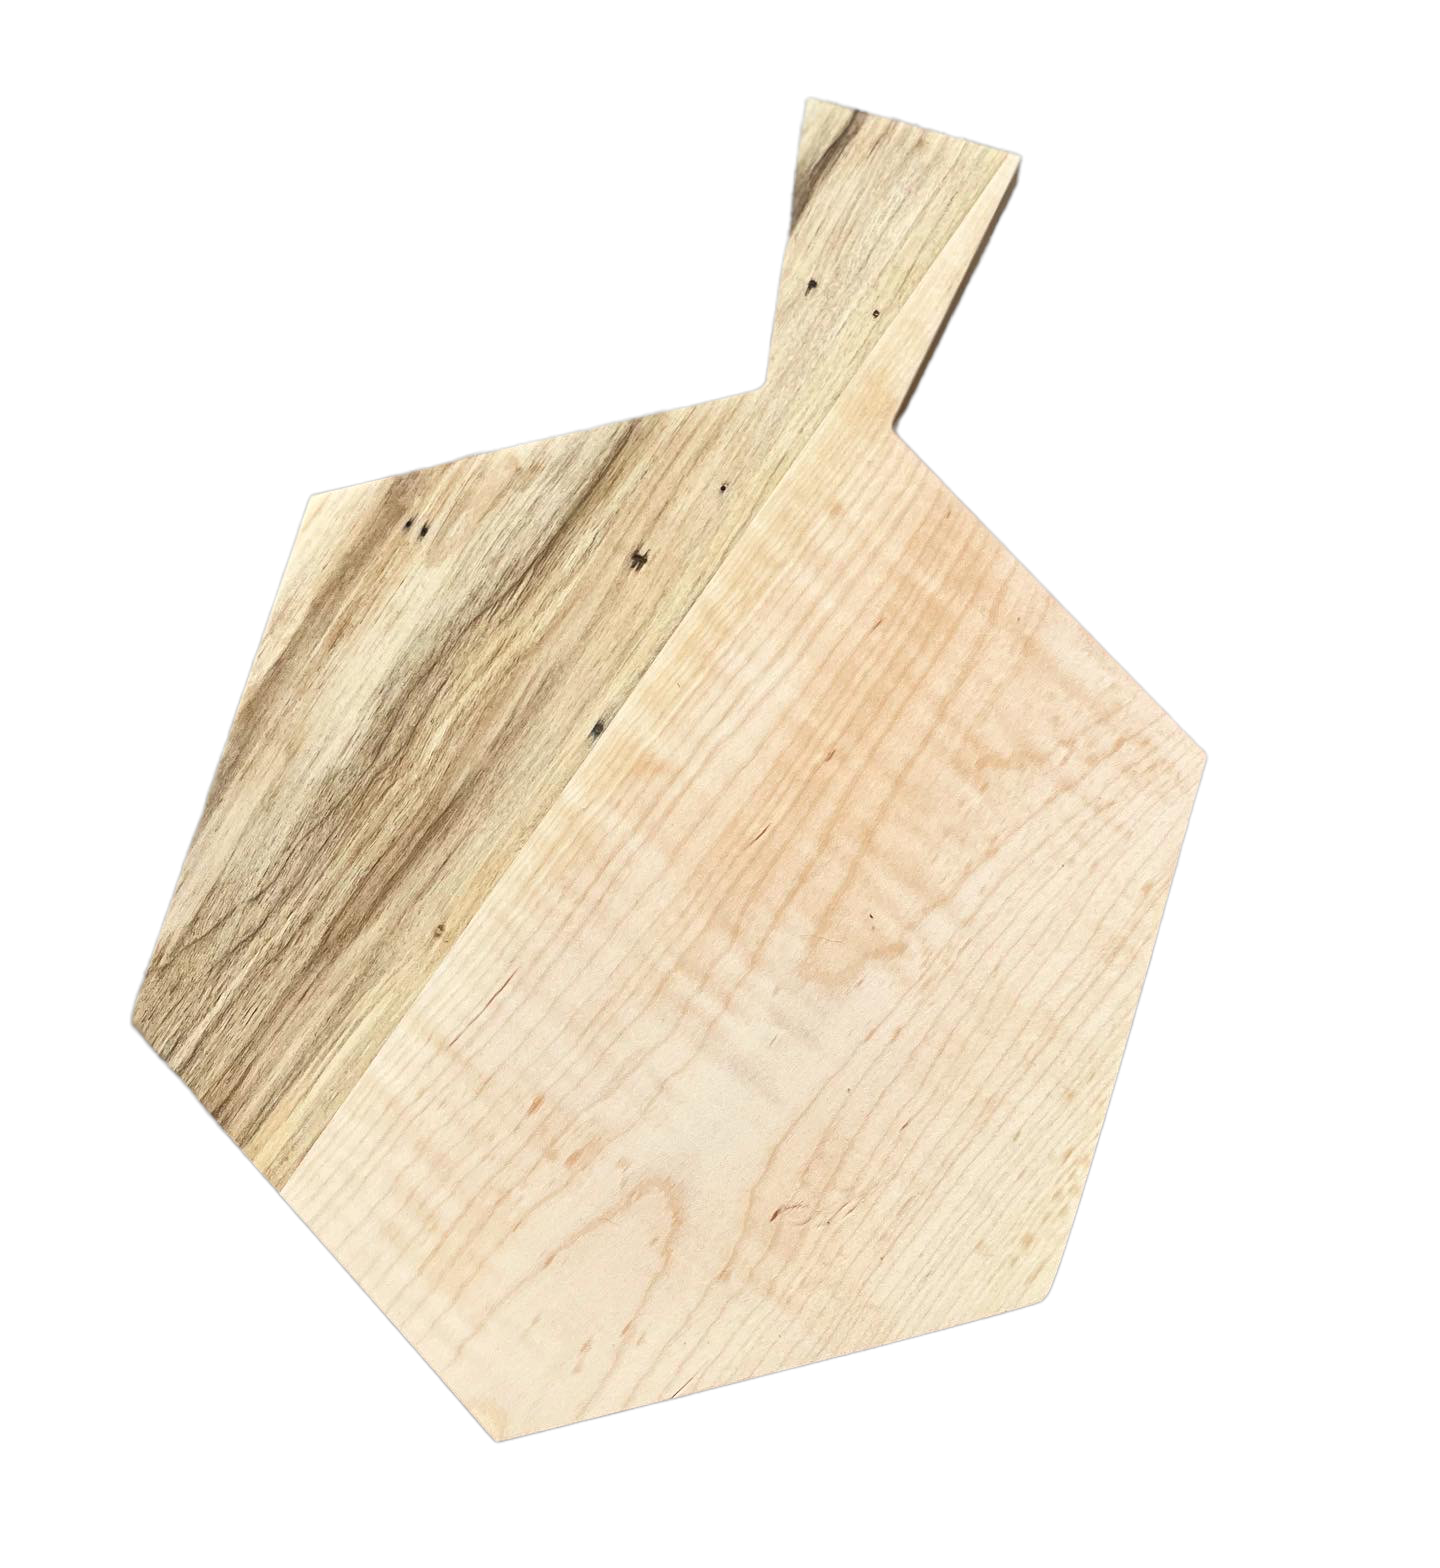 Hardwood Paddle Cutting Board G